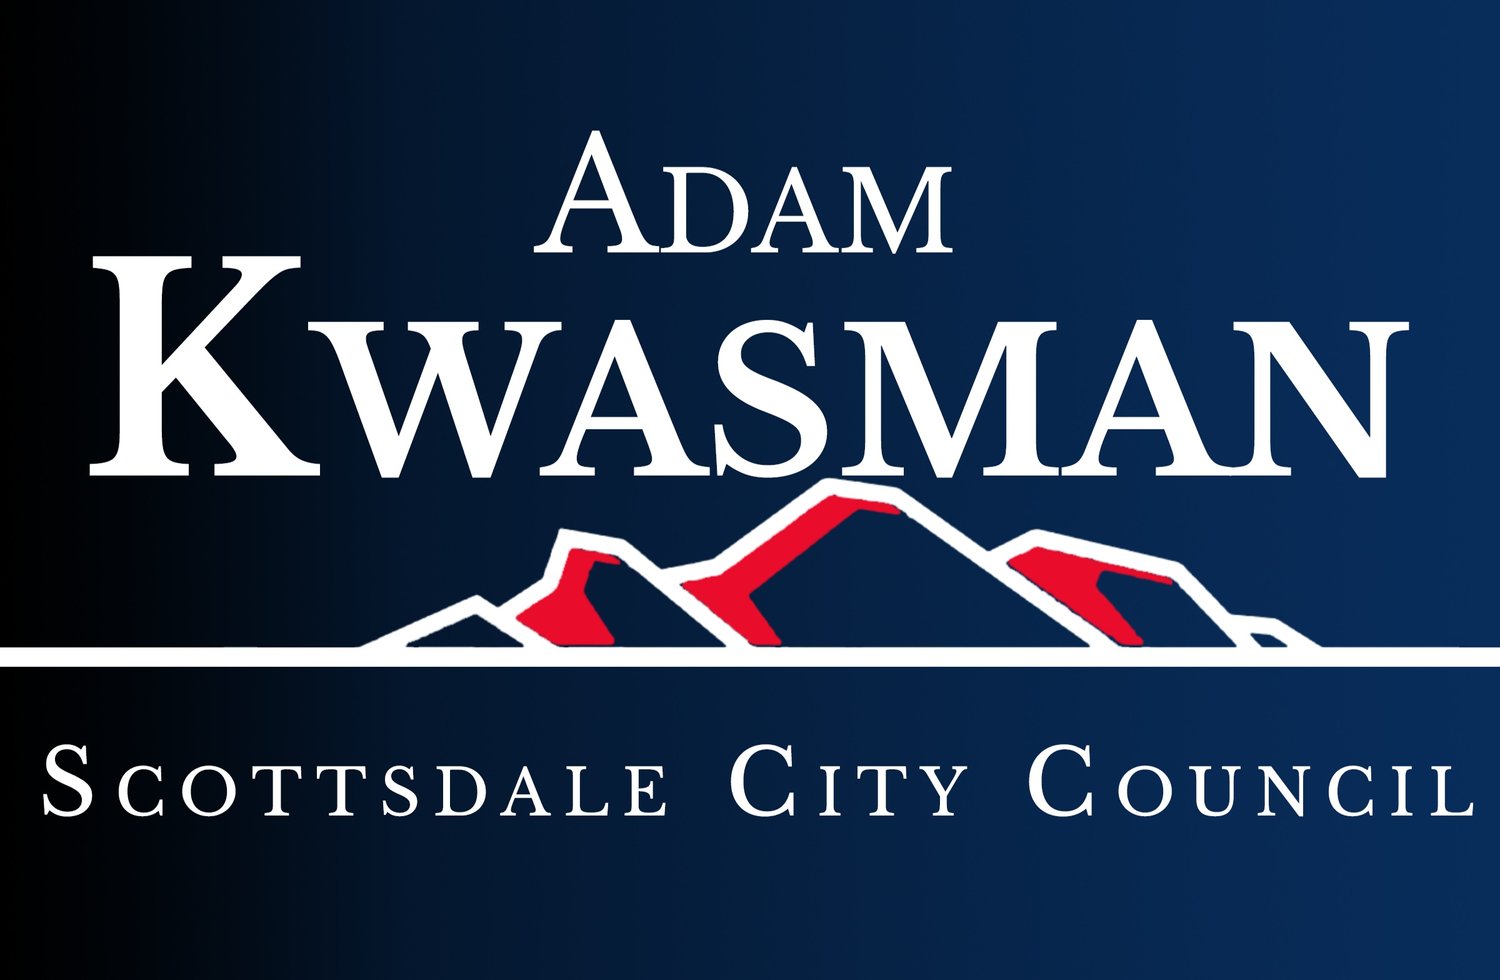 Adam Kwasman for Scottsdale